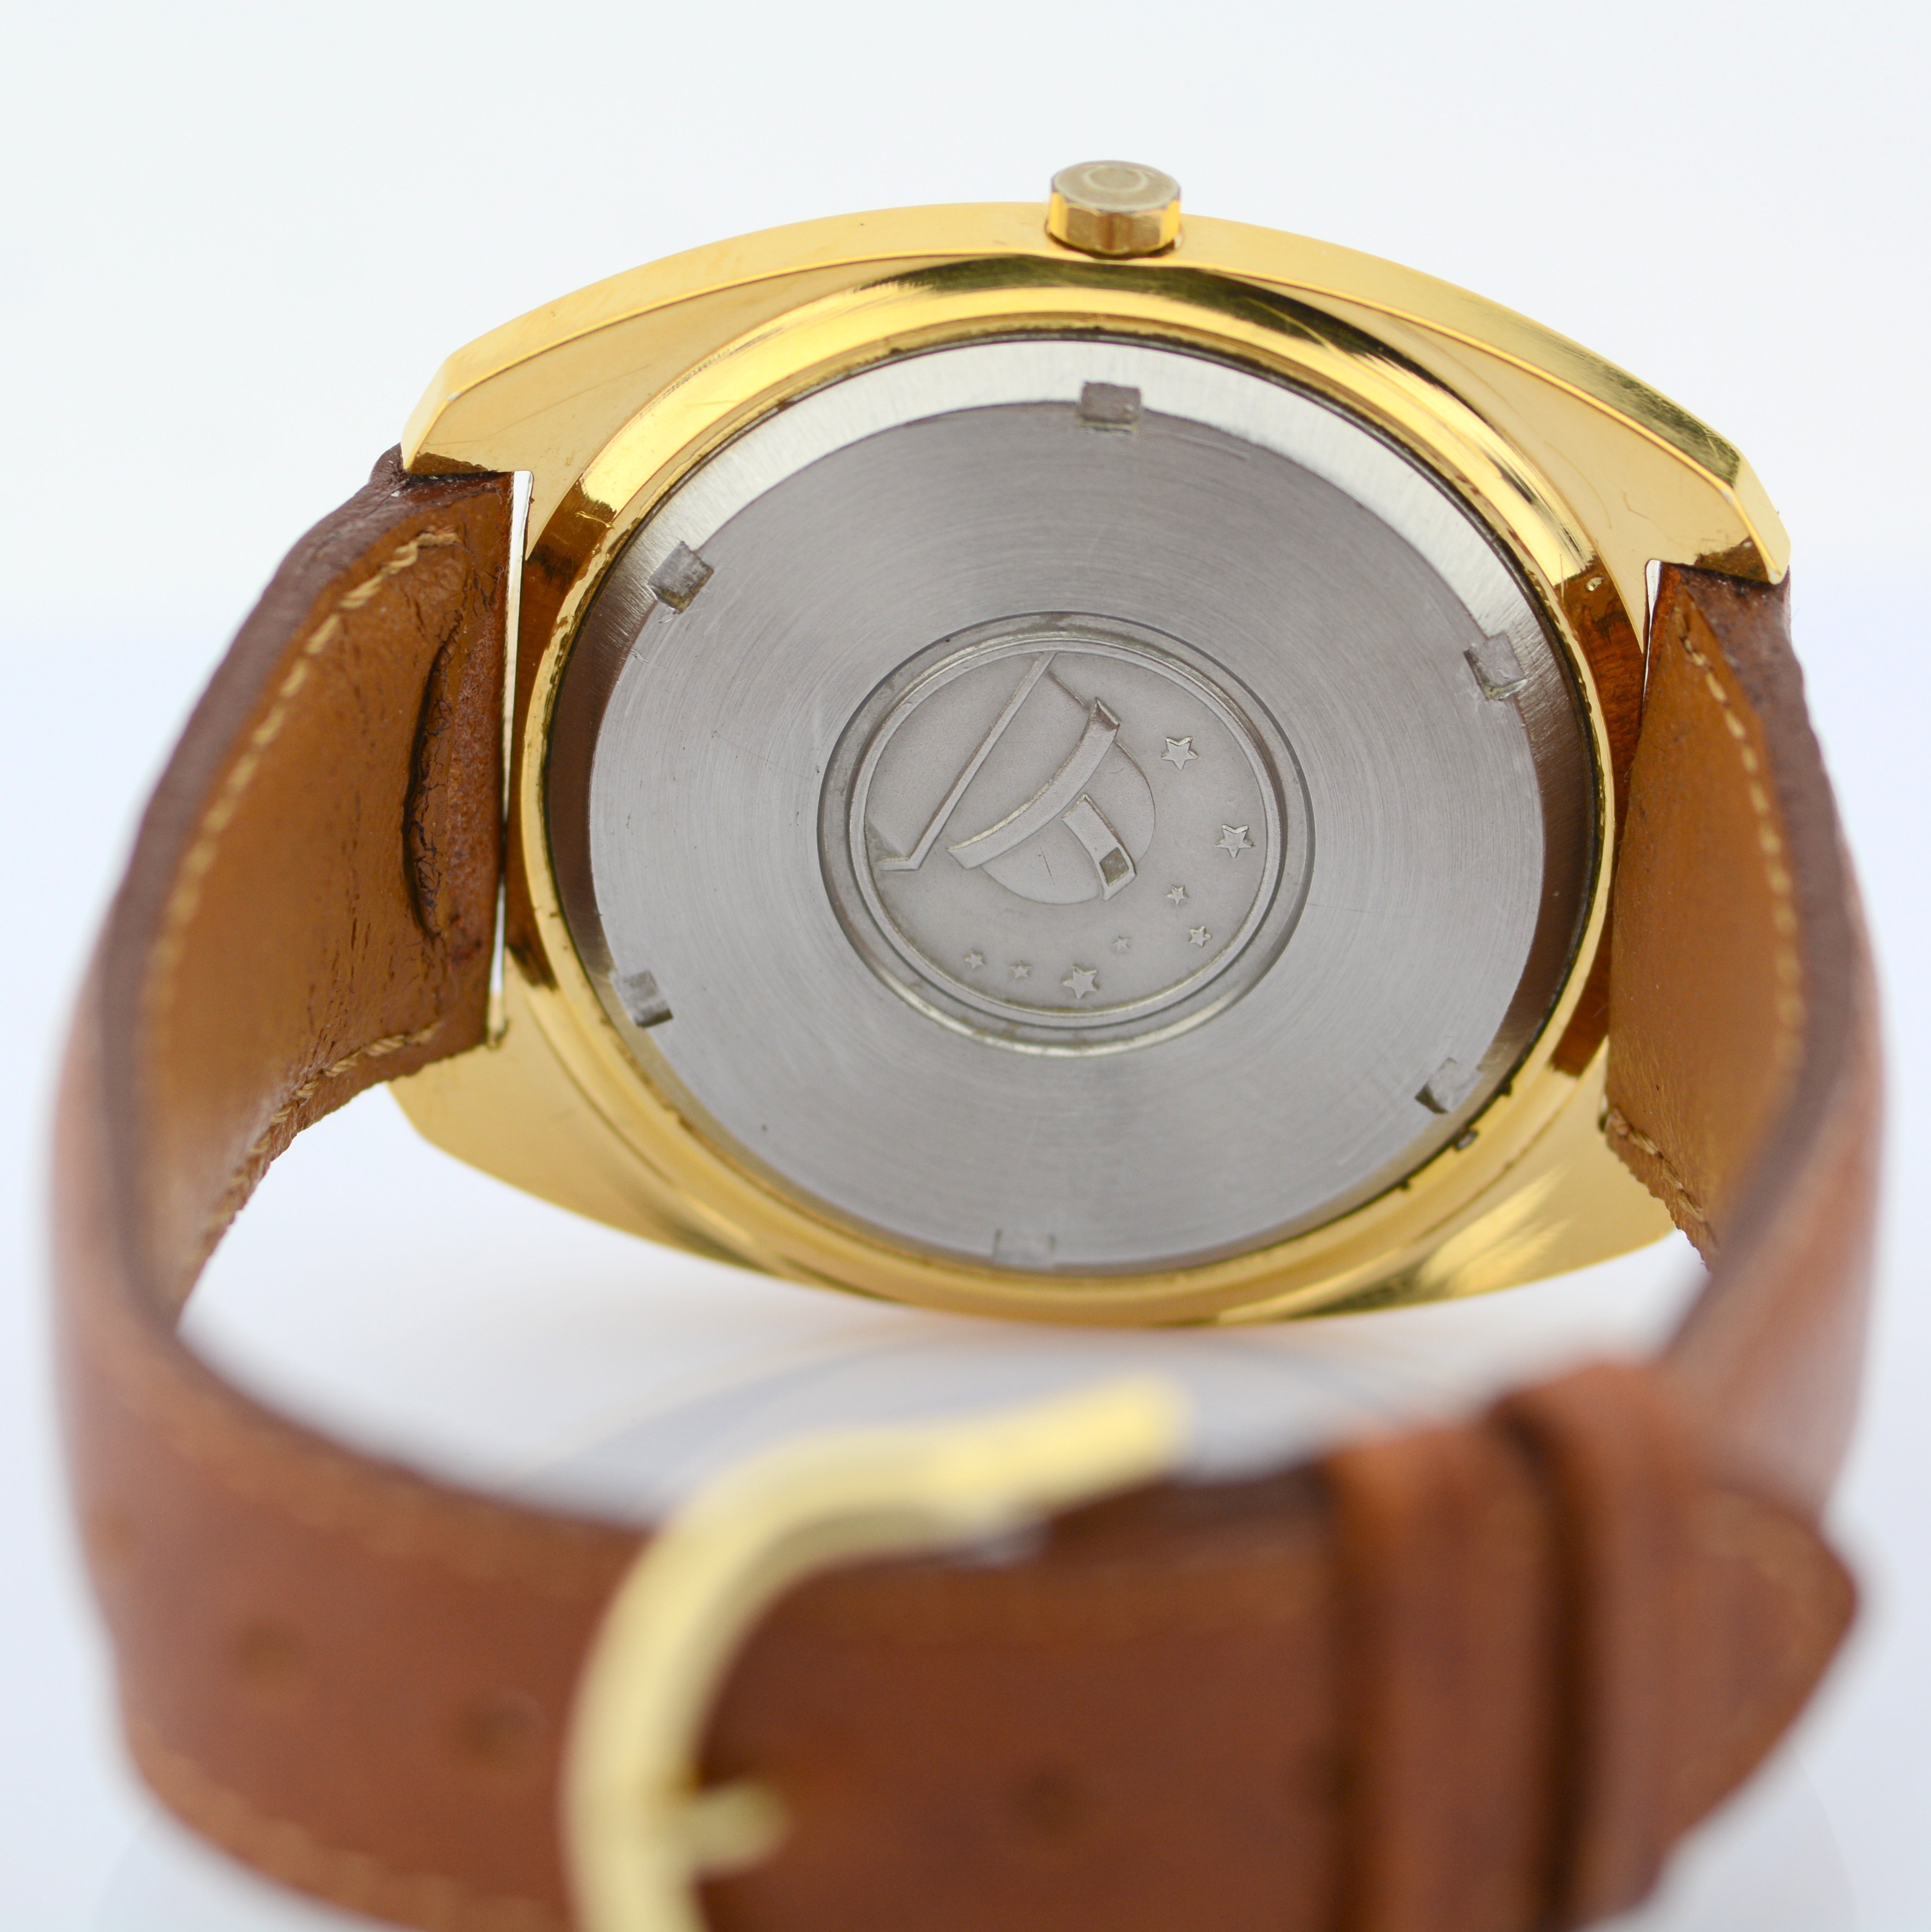 Omega / Constellation Chronometer Electronic f300Hz - Gentlmen's Gold/Steel Wrist Watch - Image 5 of 6